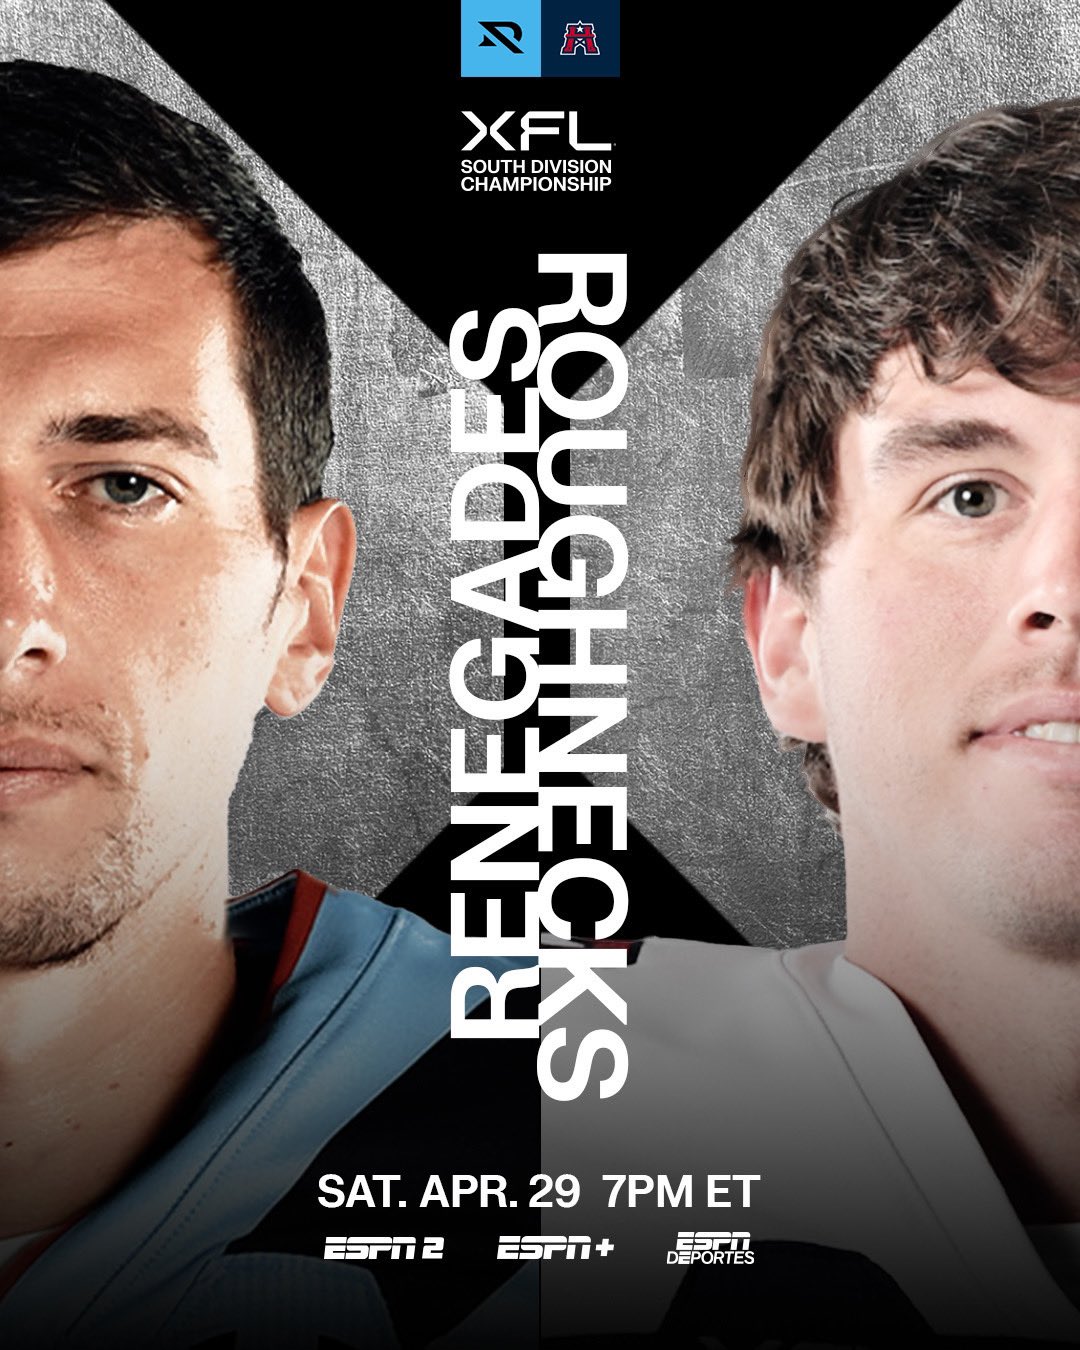 Arlington Renegades vs. Houston Roughnecks Prediction and Preview (XFL  Football) 